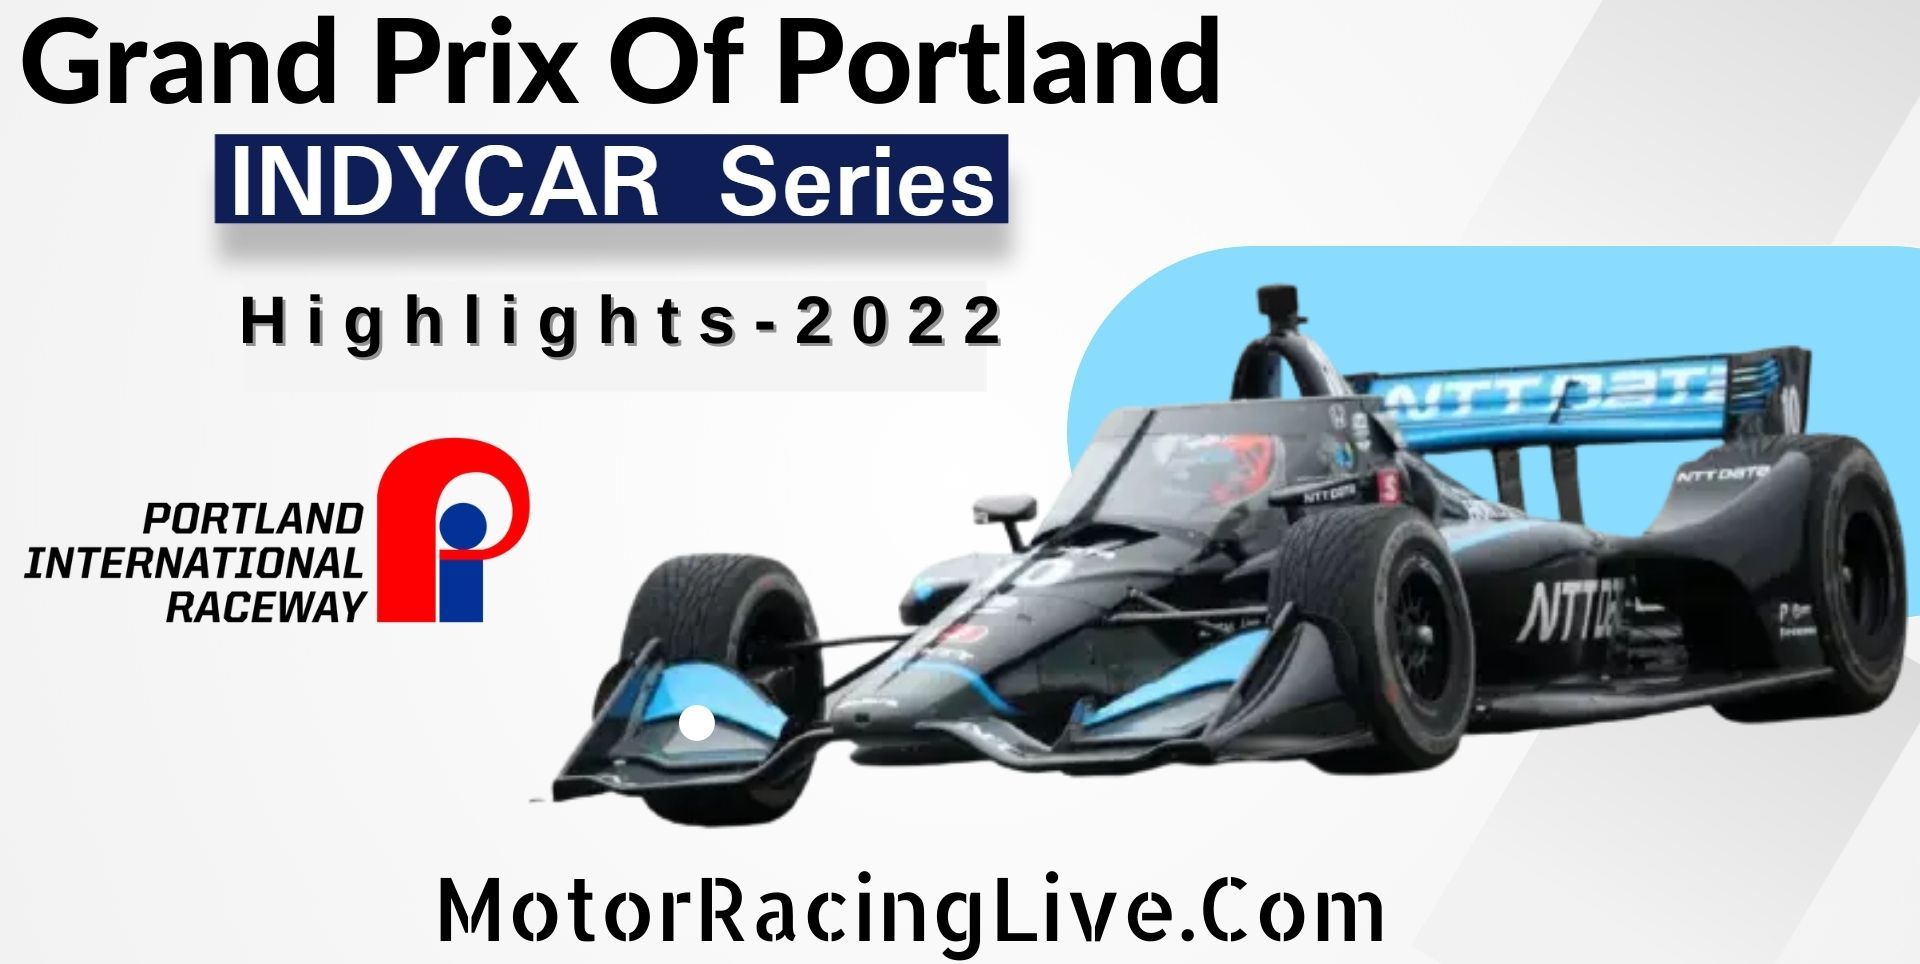 Grand Prix Of Portland Highlights 2022 Indycar